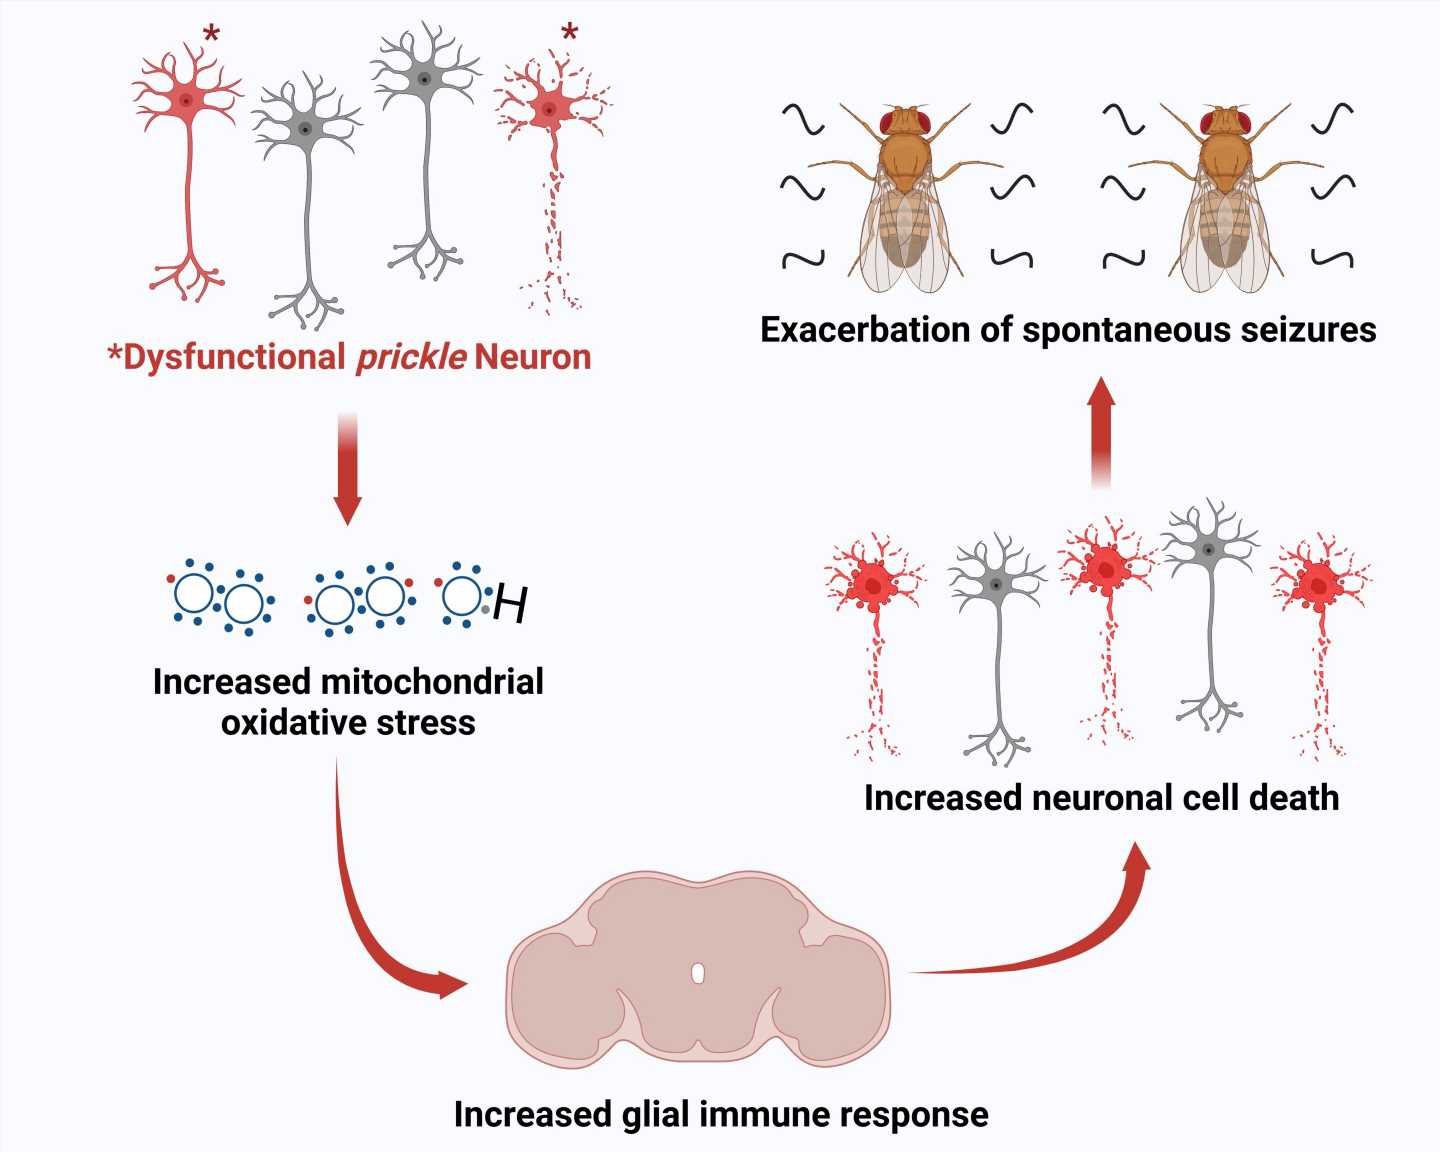 How the brain’s immune system worsens epilepsy